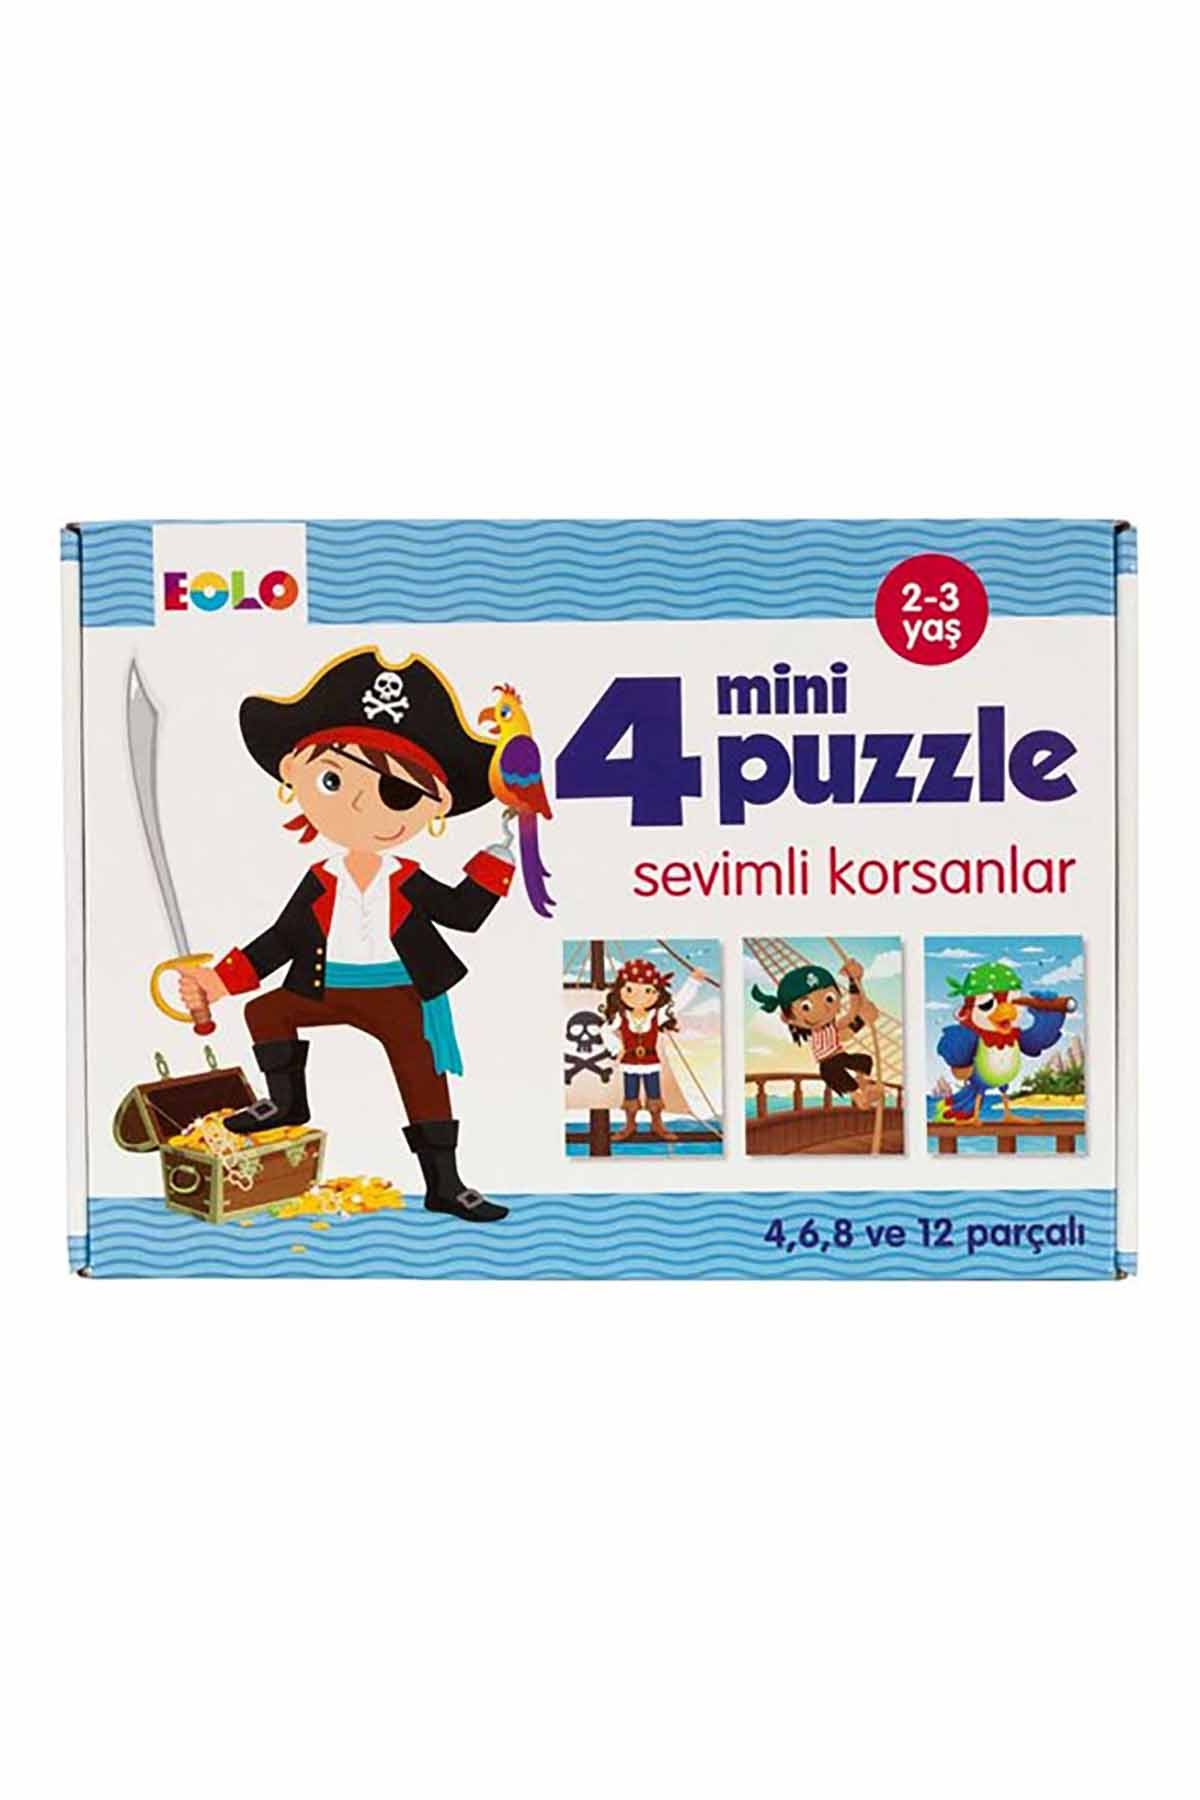 Eolo 4 Mini Puzzle Sevimli Korsanlar